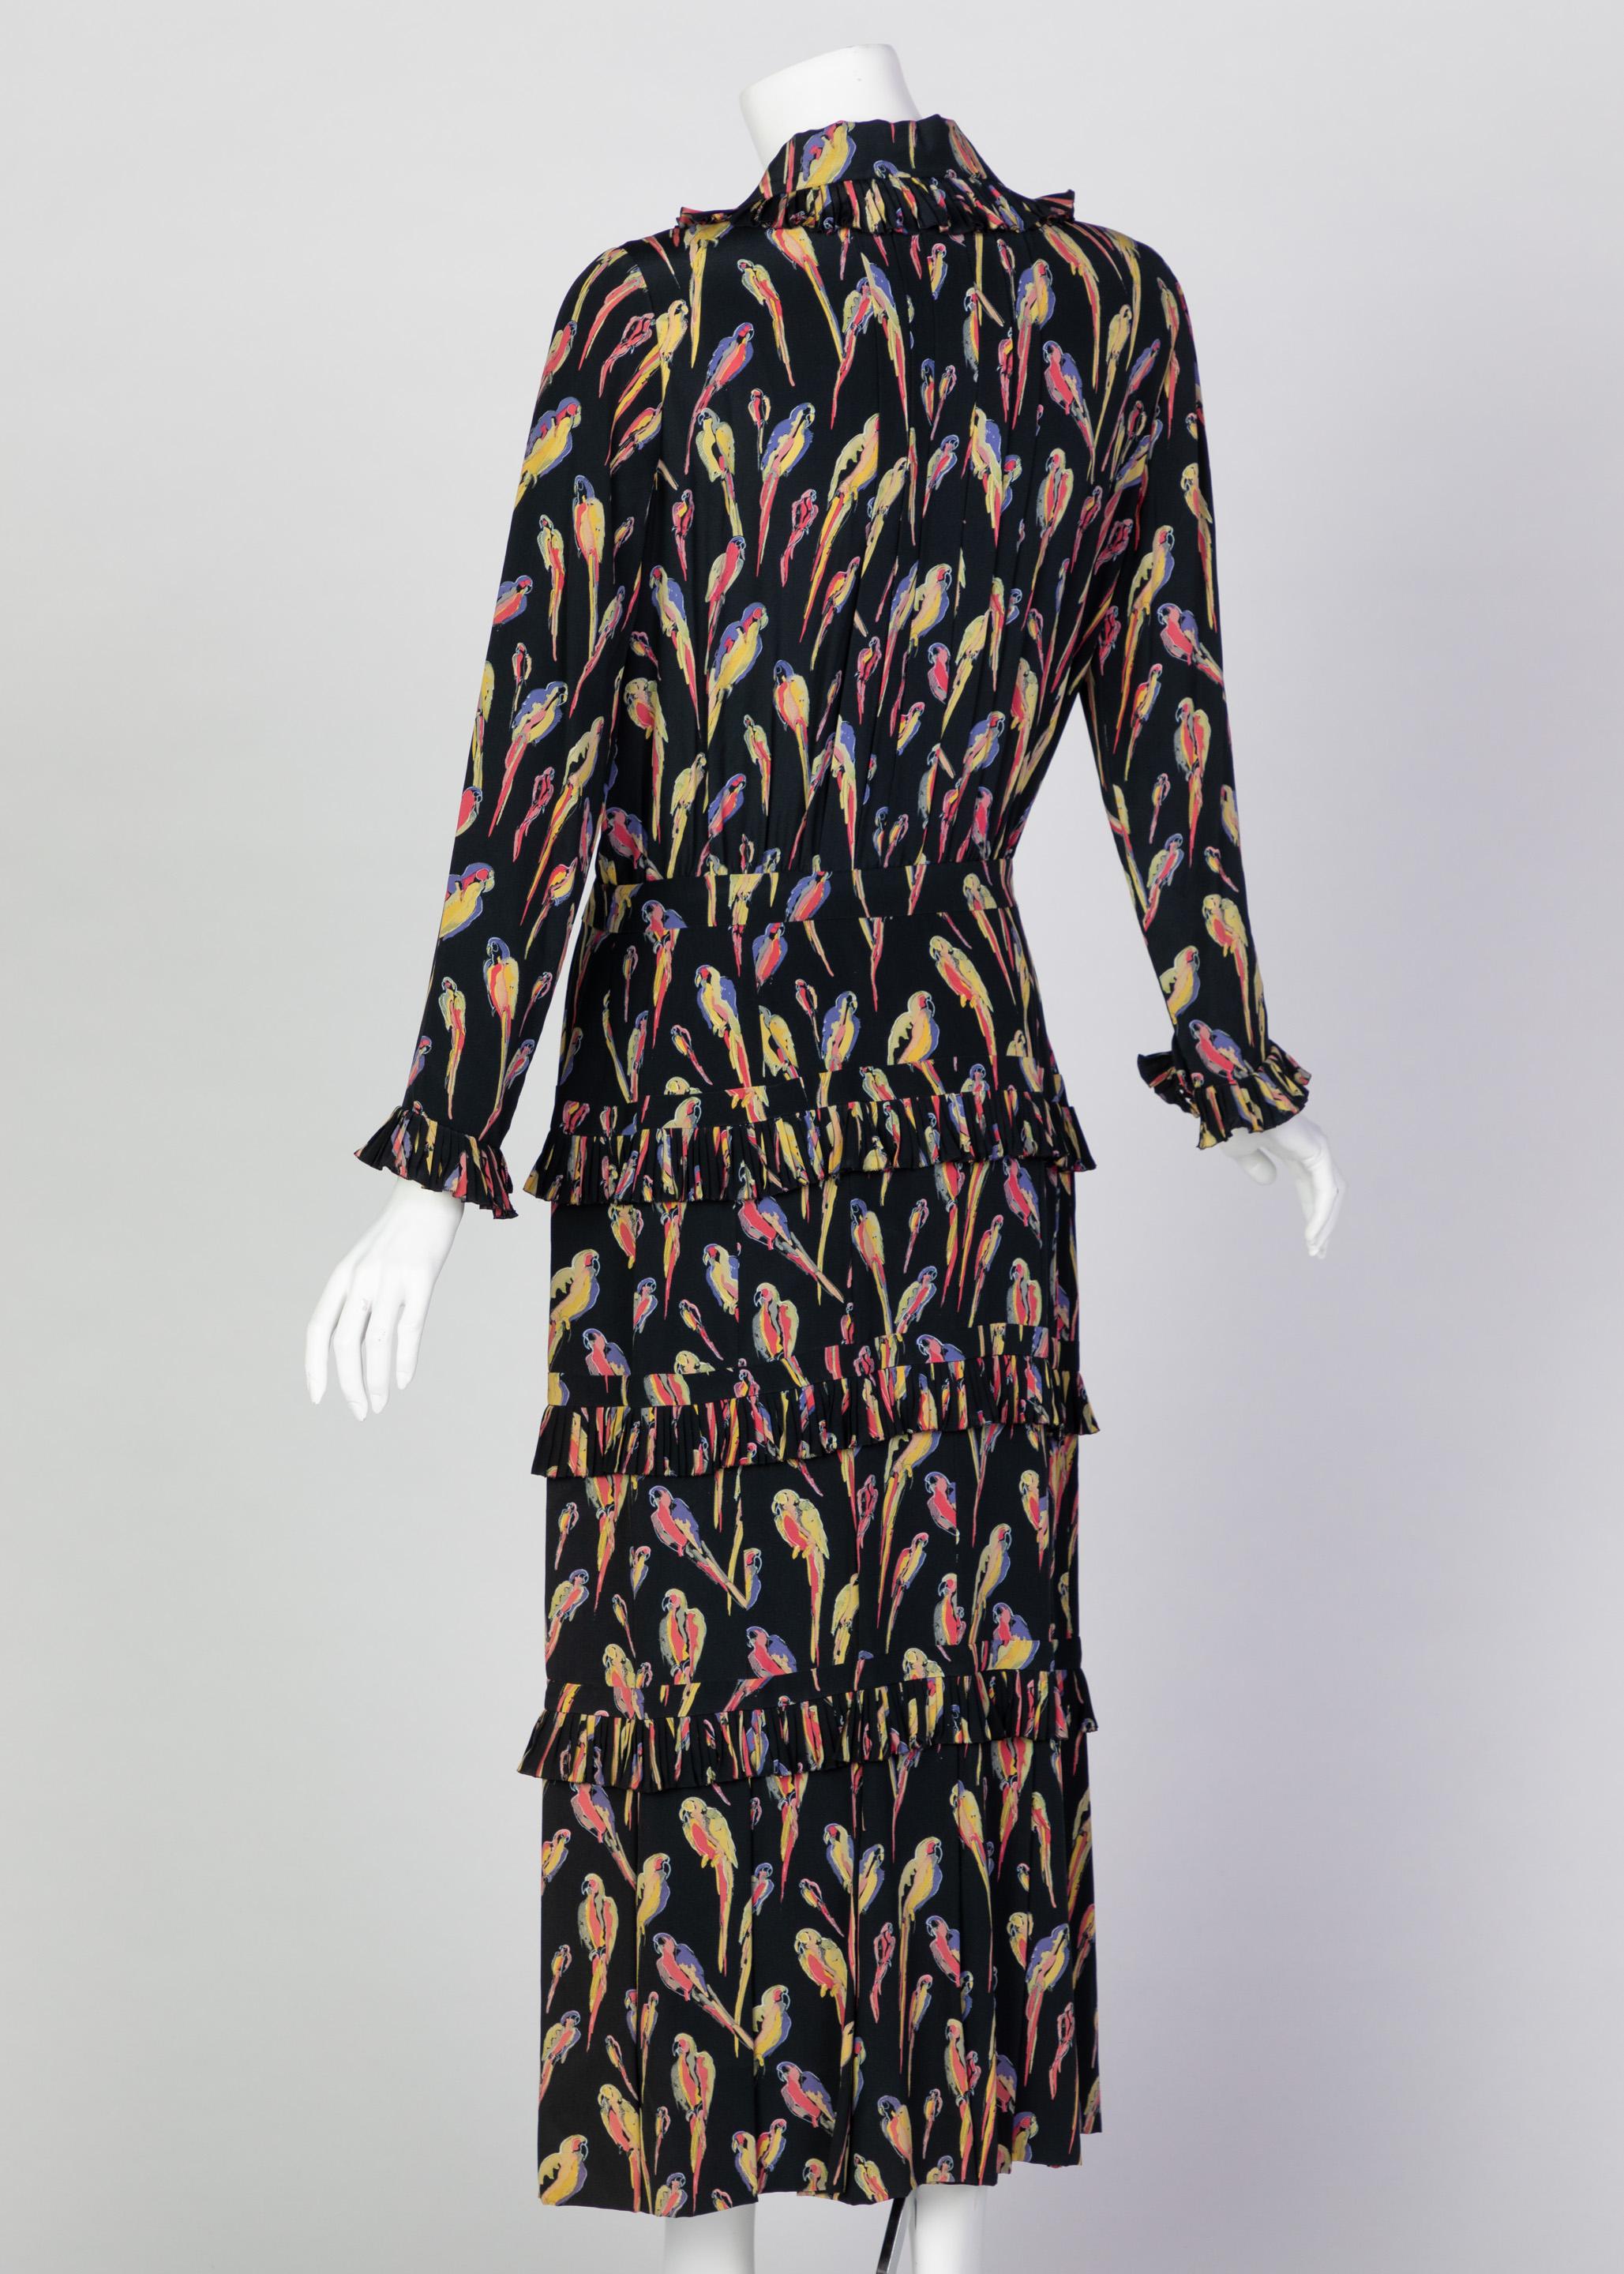 Women's Chanel Black Silk Colorful Bird Print Gold Button Dress, 1980s